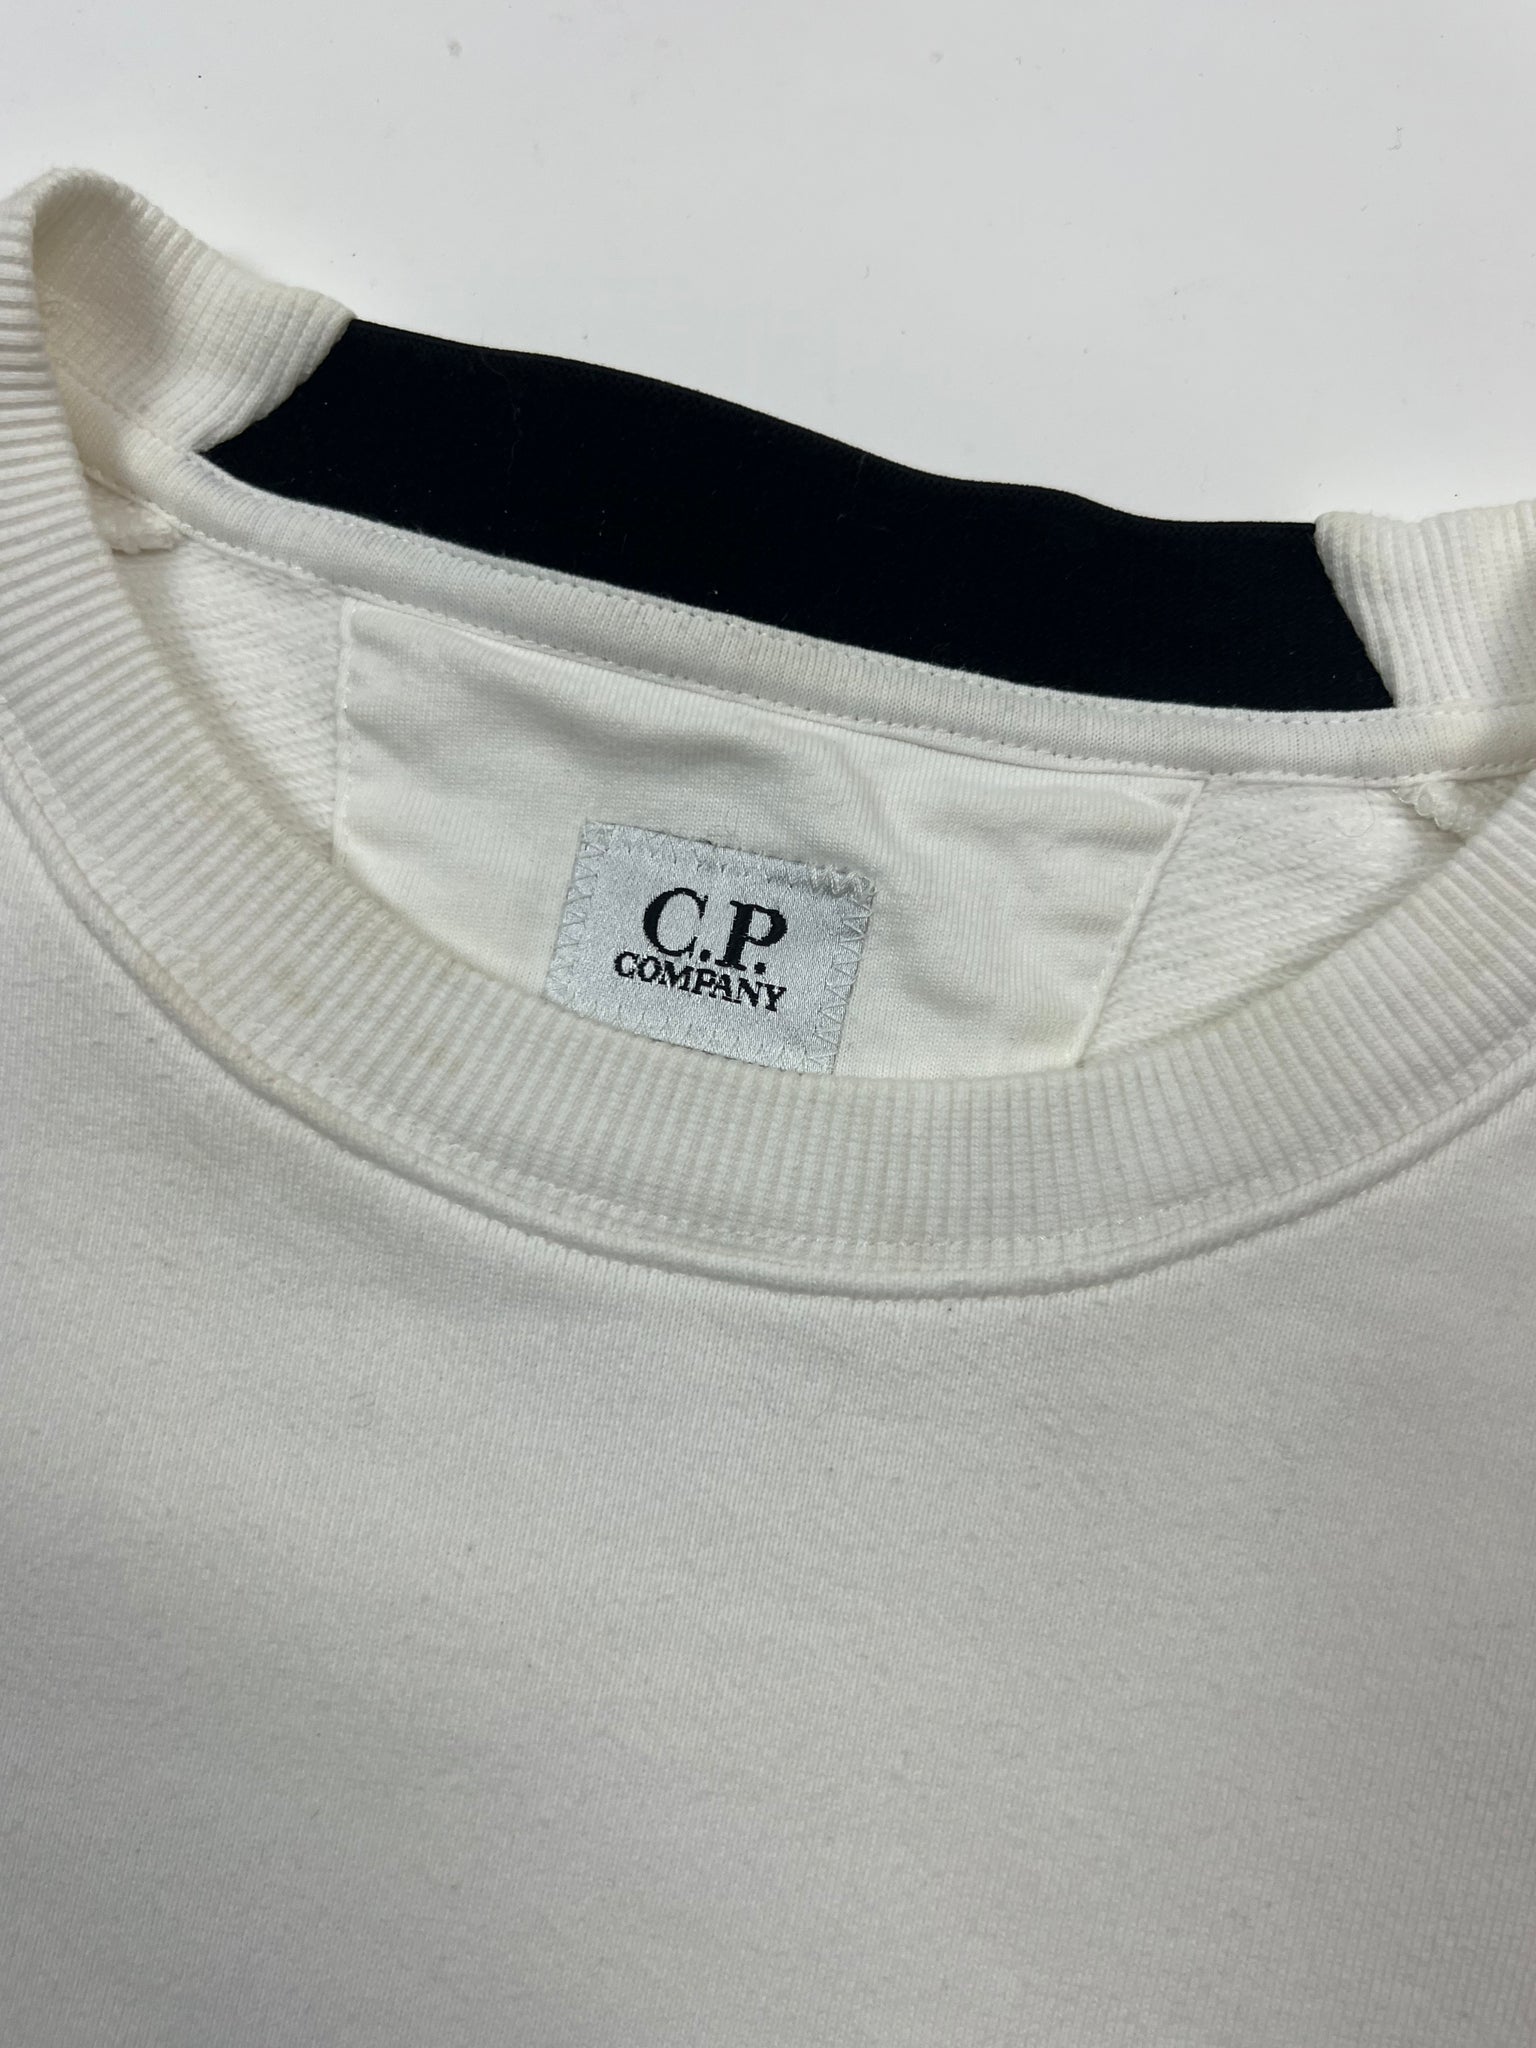 C. P. Company Sweater (M)